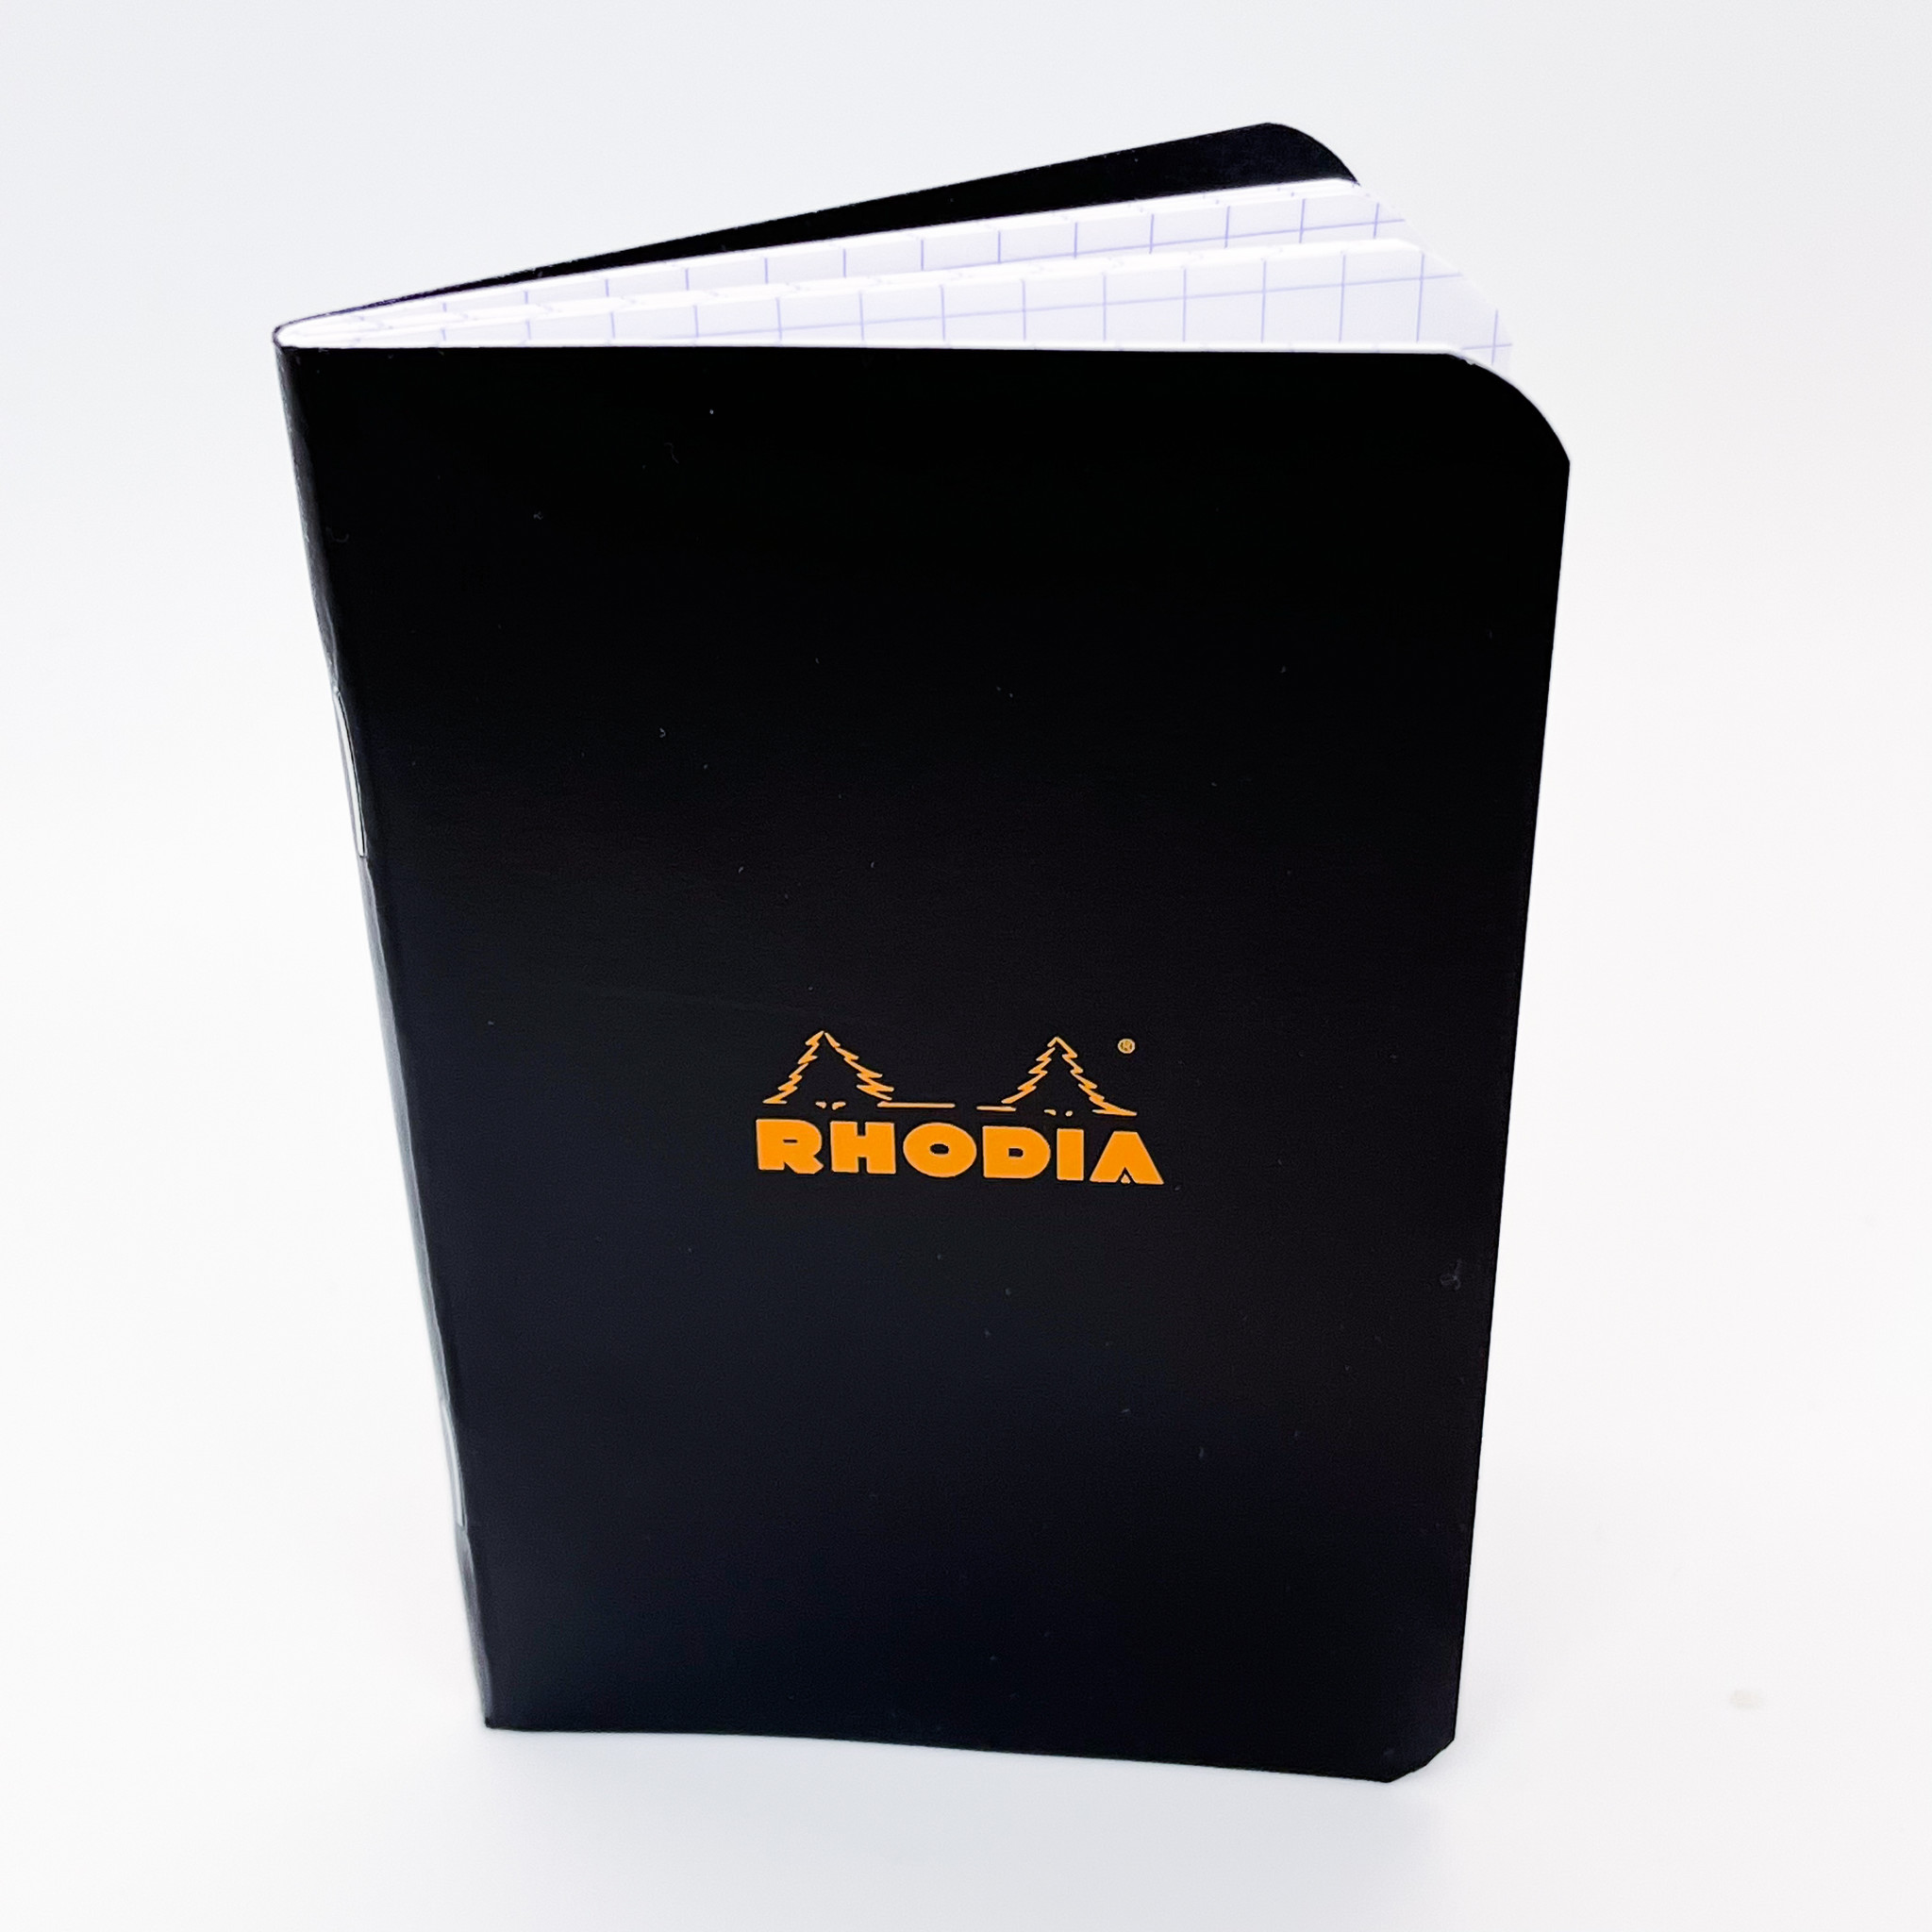 Rhodia - RHO Rhodia - Black Graph Classic Notebook 3 x 4.75